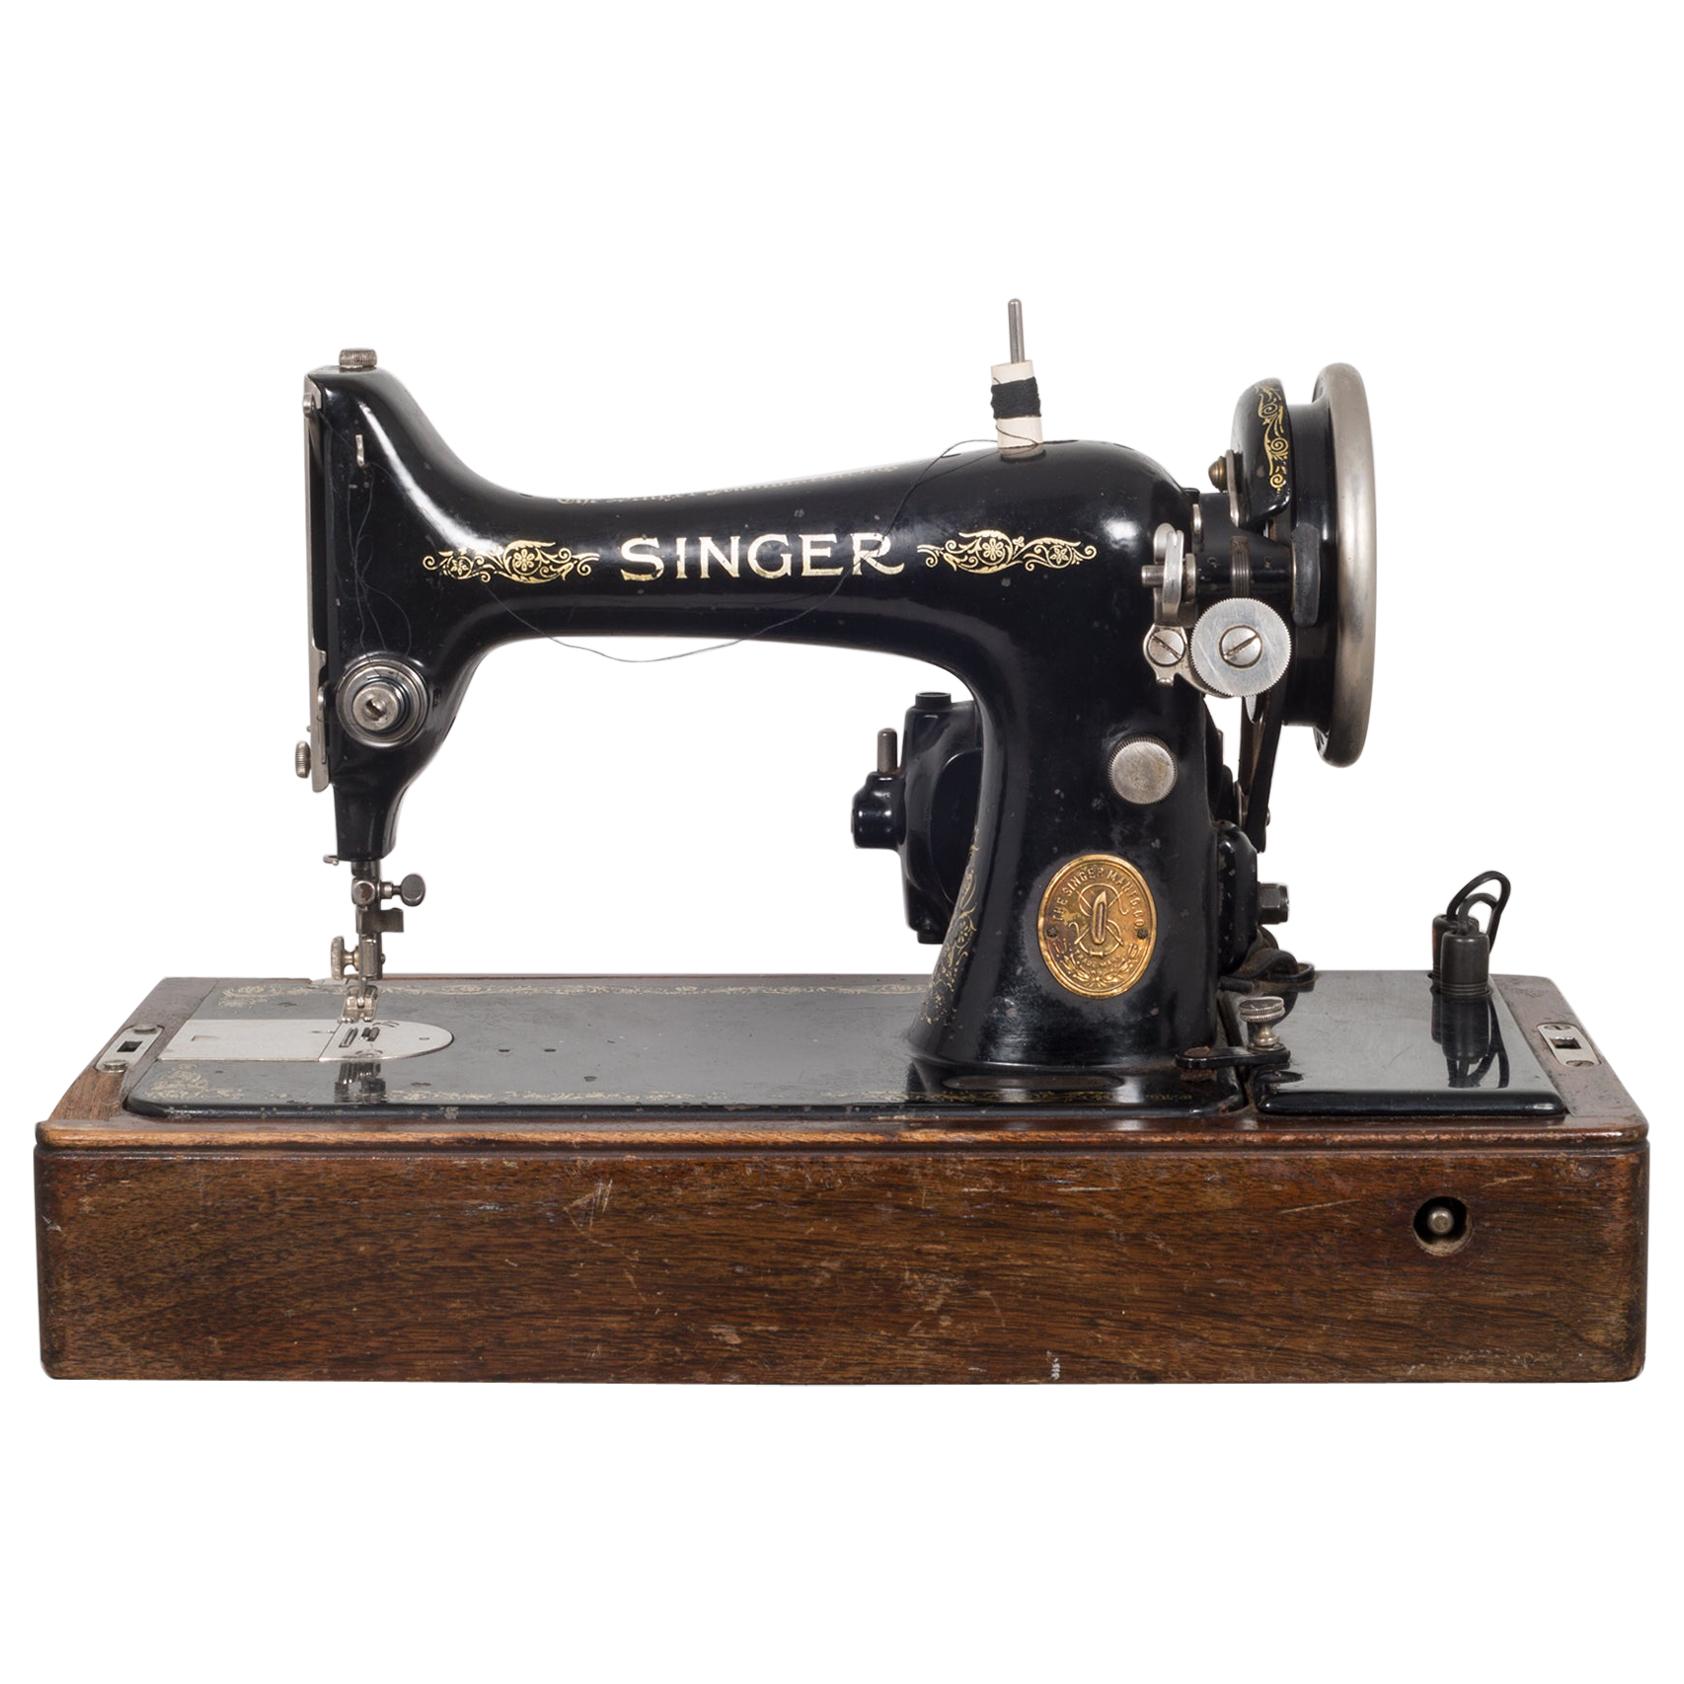 Singer Sewing Machine in Original Case and Key/Bakelite Handle, 1920s